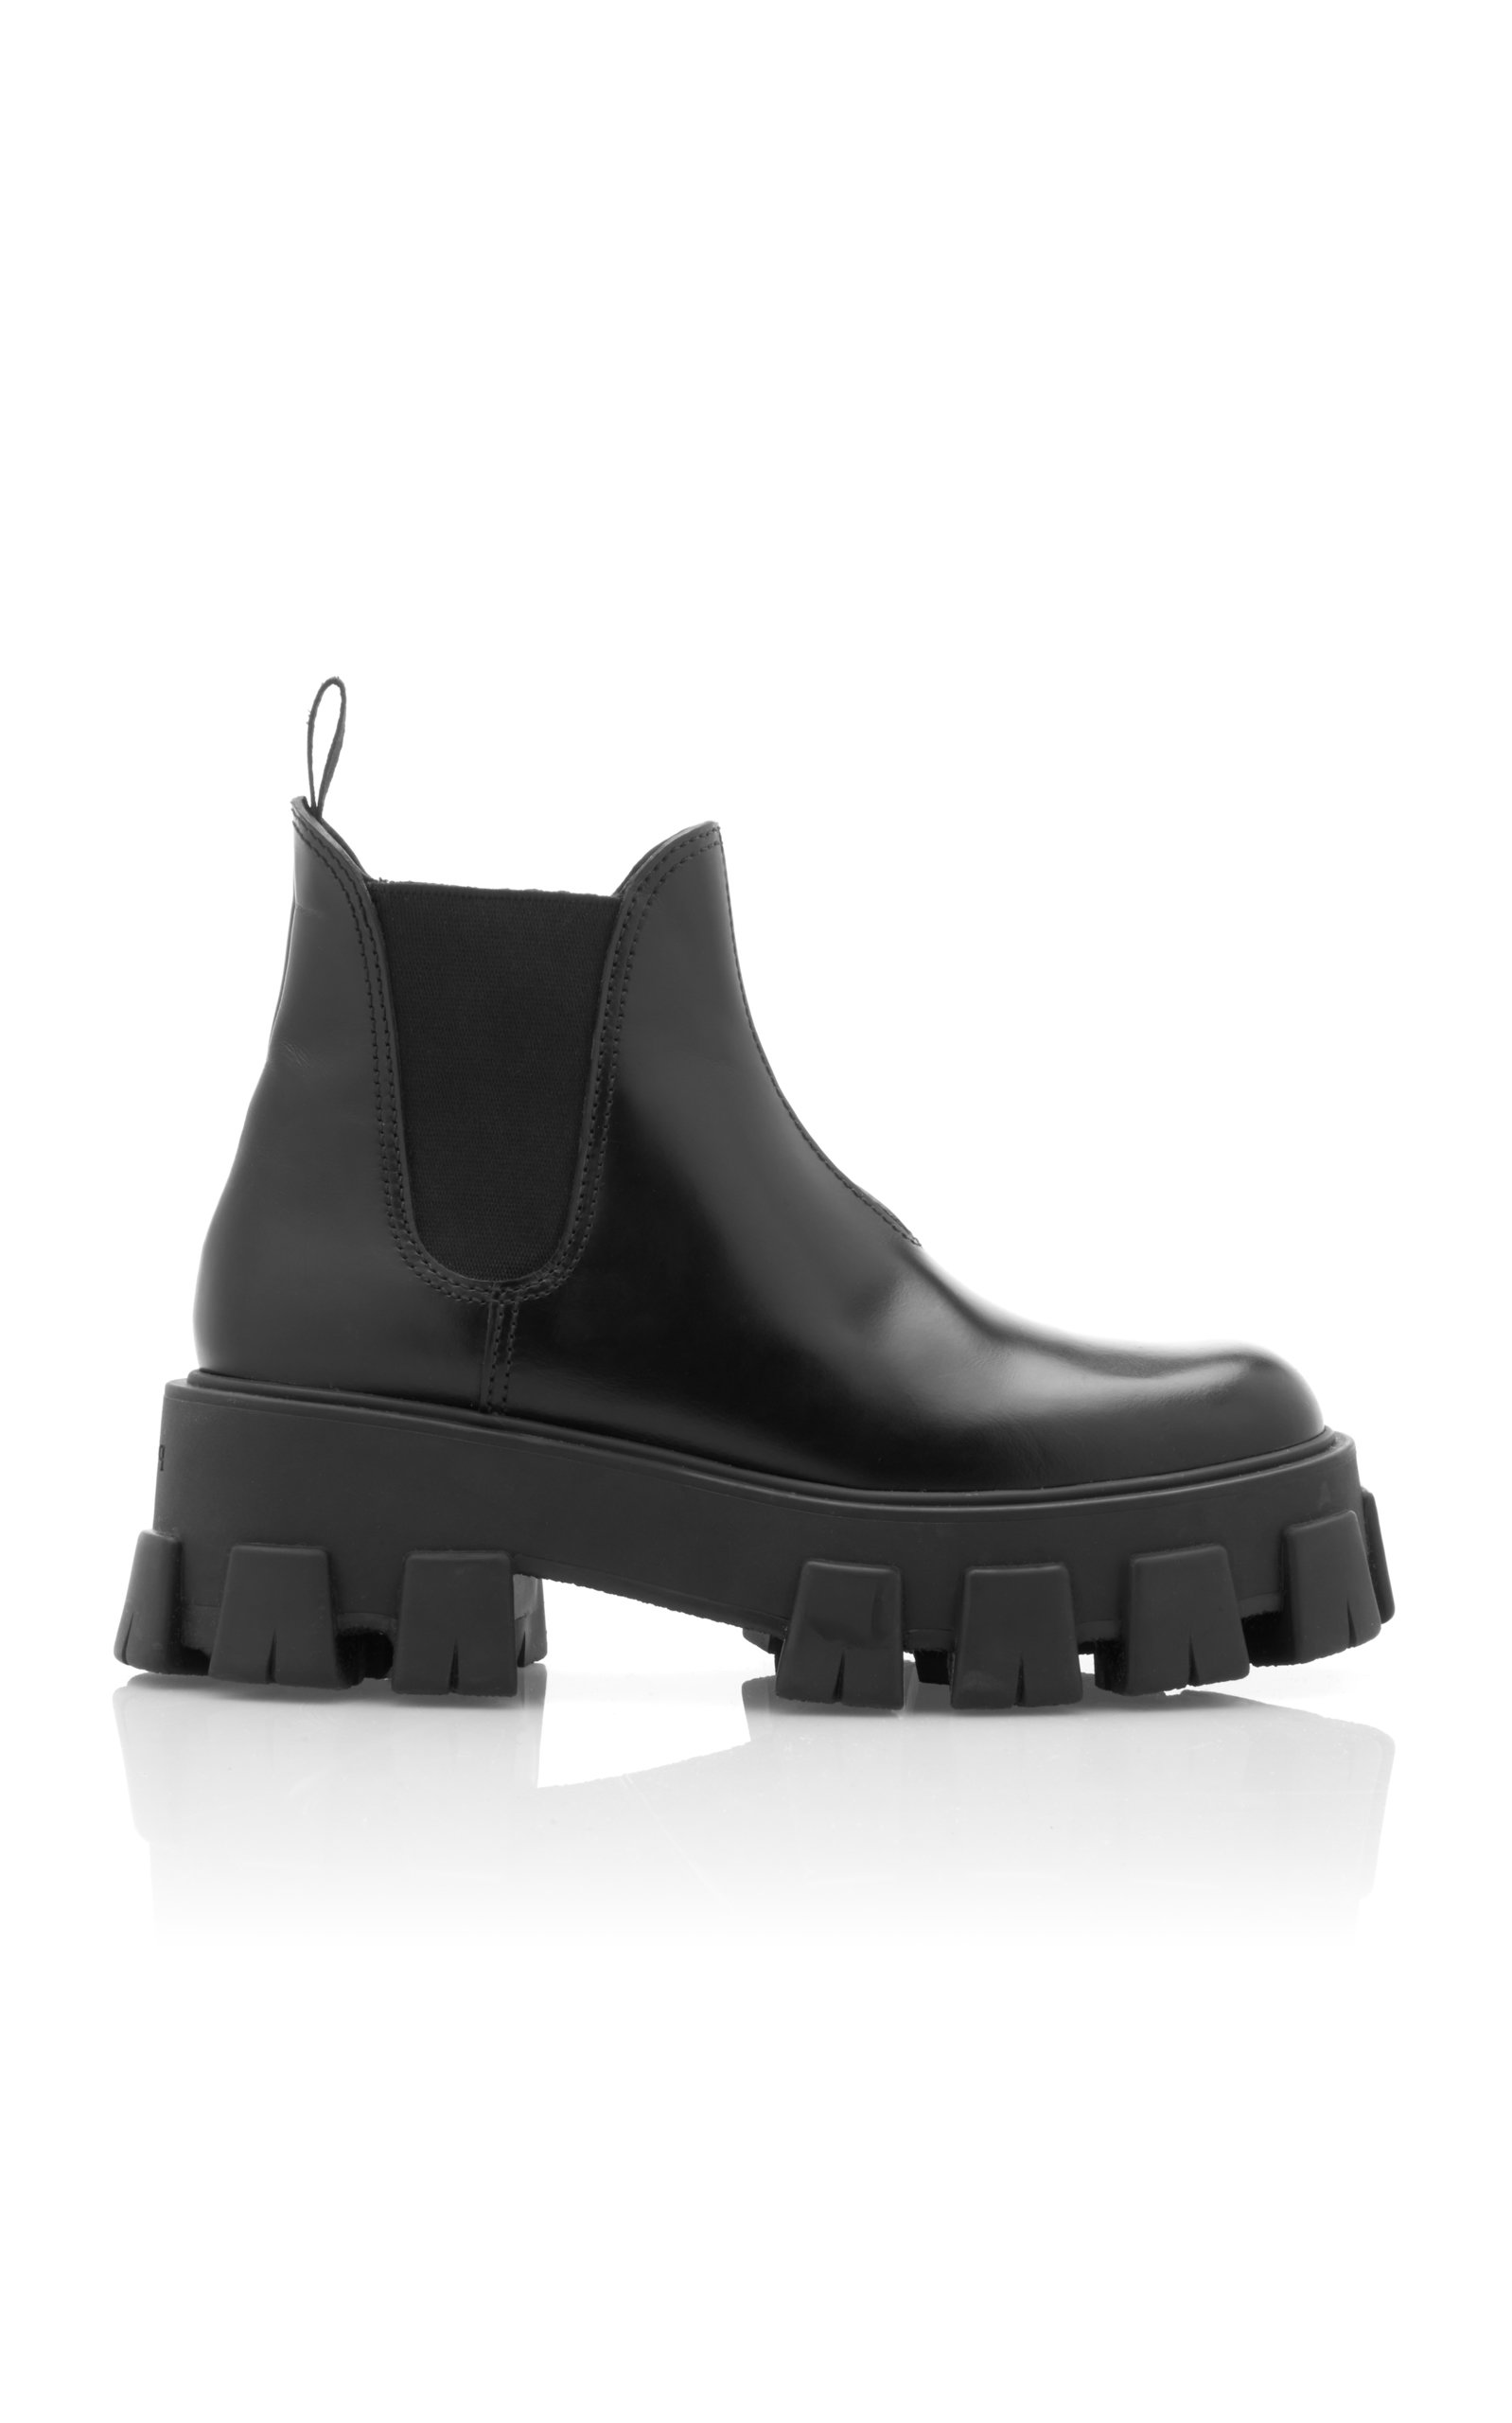 Prada - Women's Lug Sole Leather Boots - Black - IT 39.5 - Moda Operandi